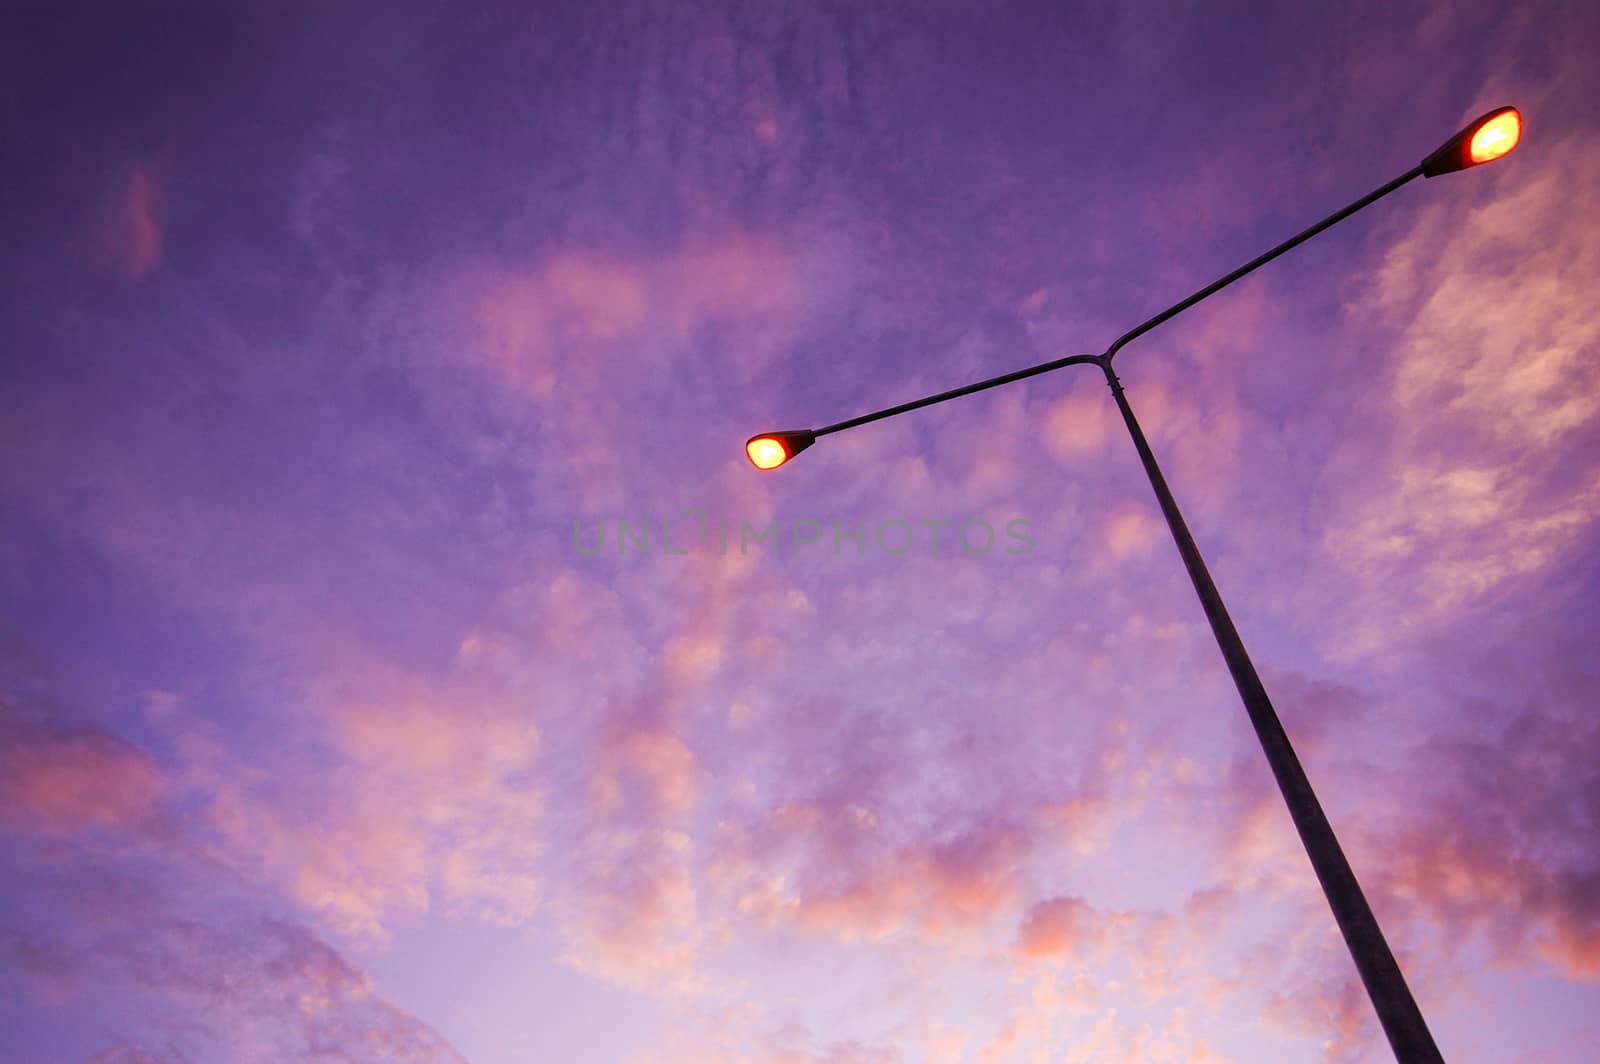 twilight sky with road lighting